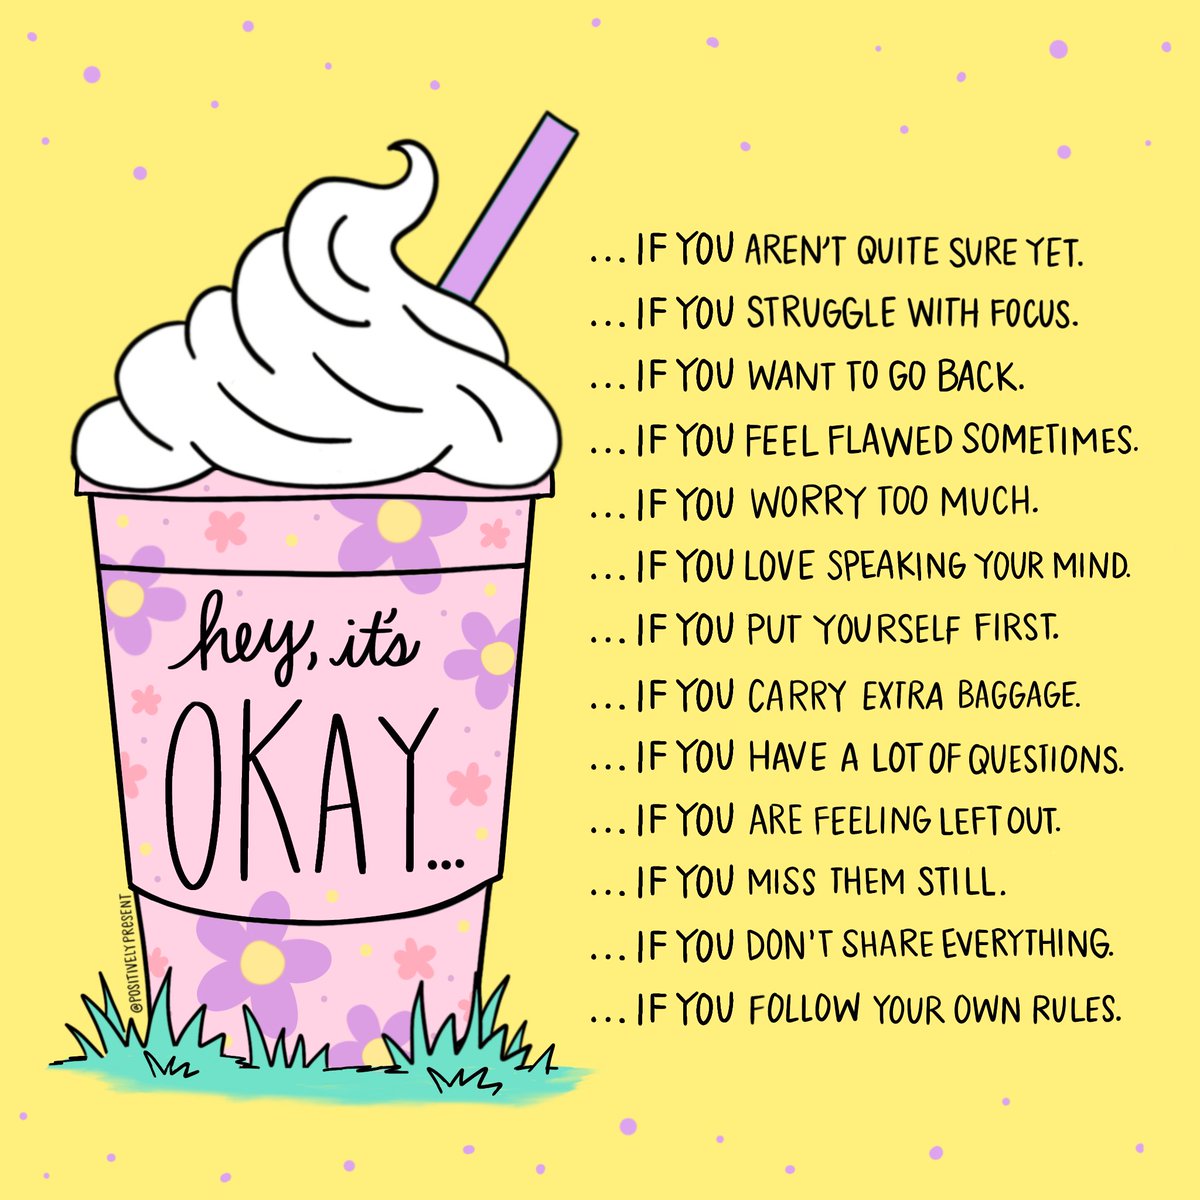 Hey, it’s okay…